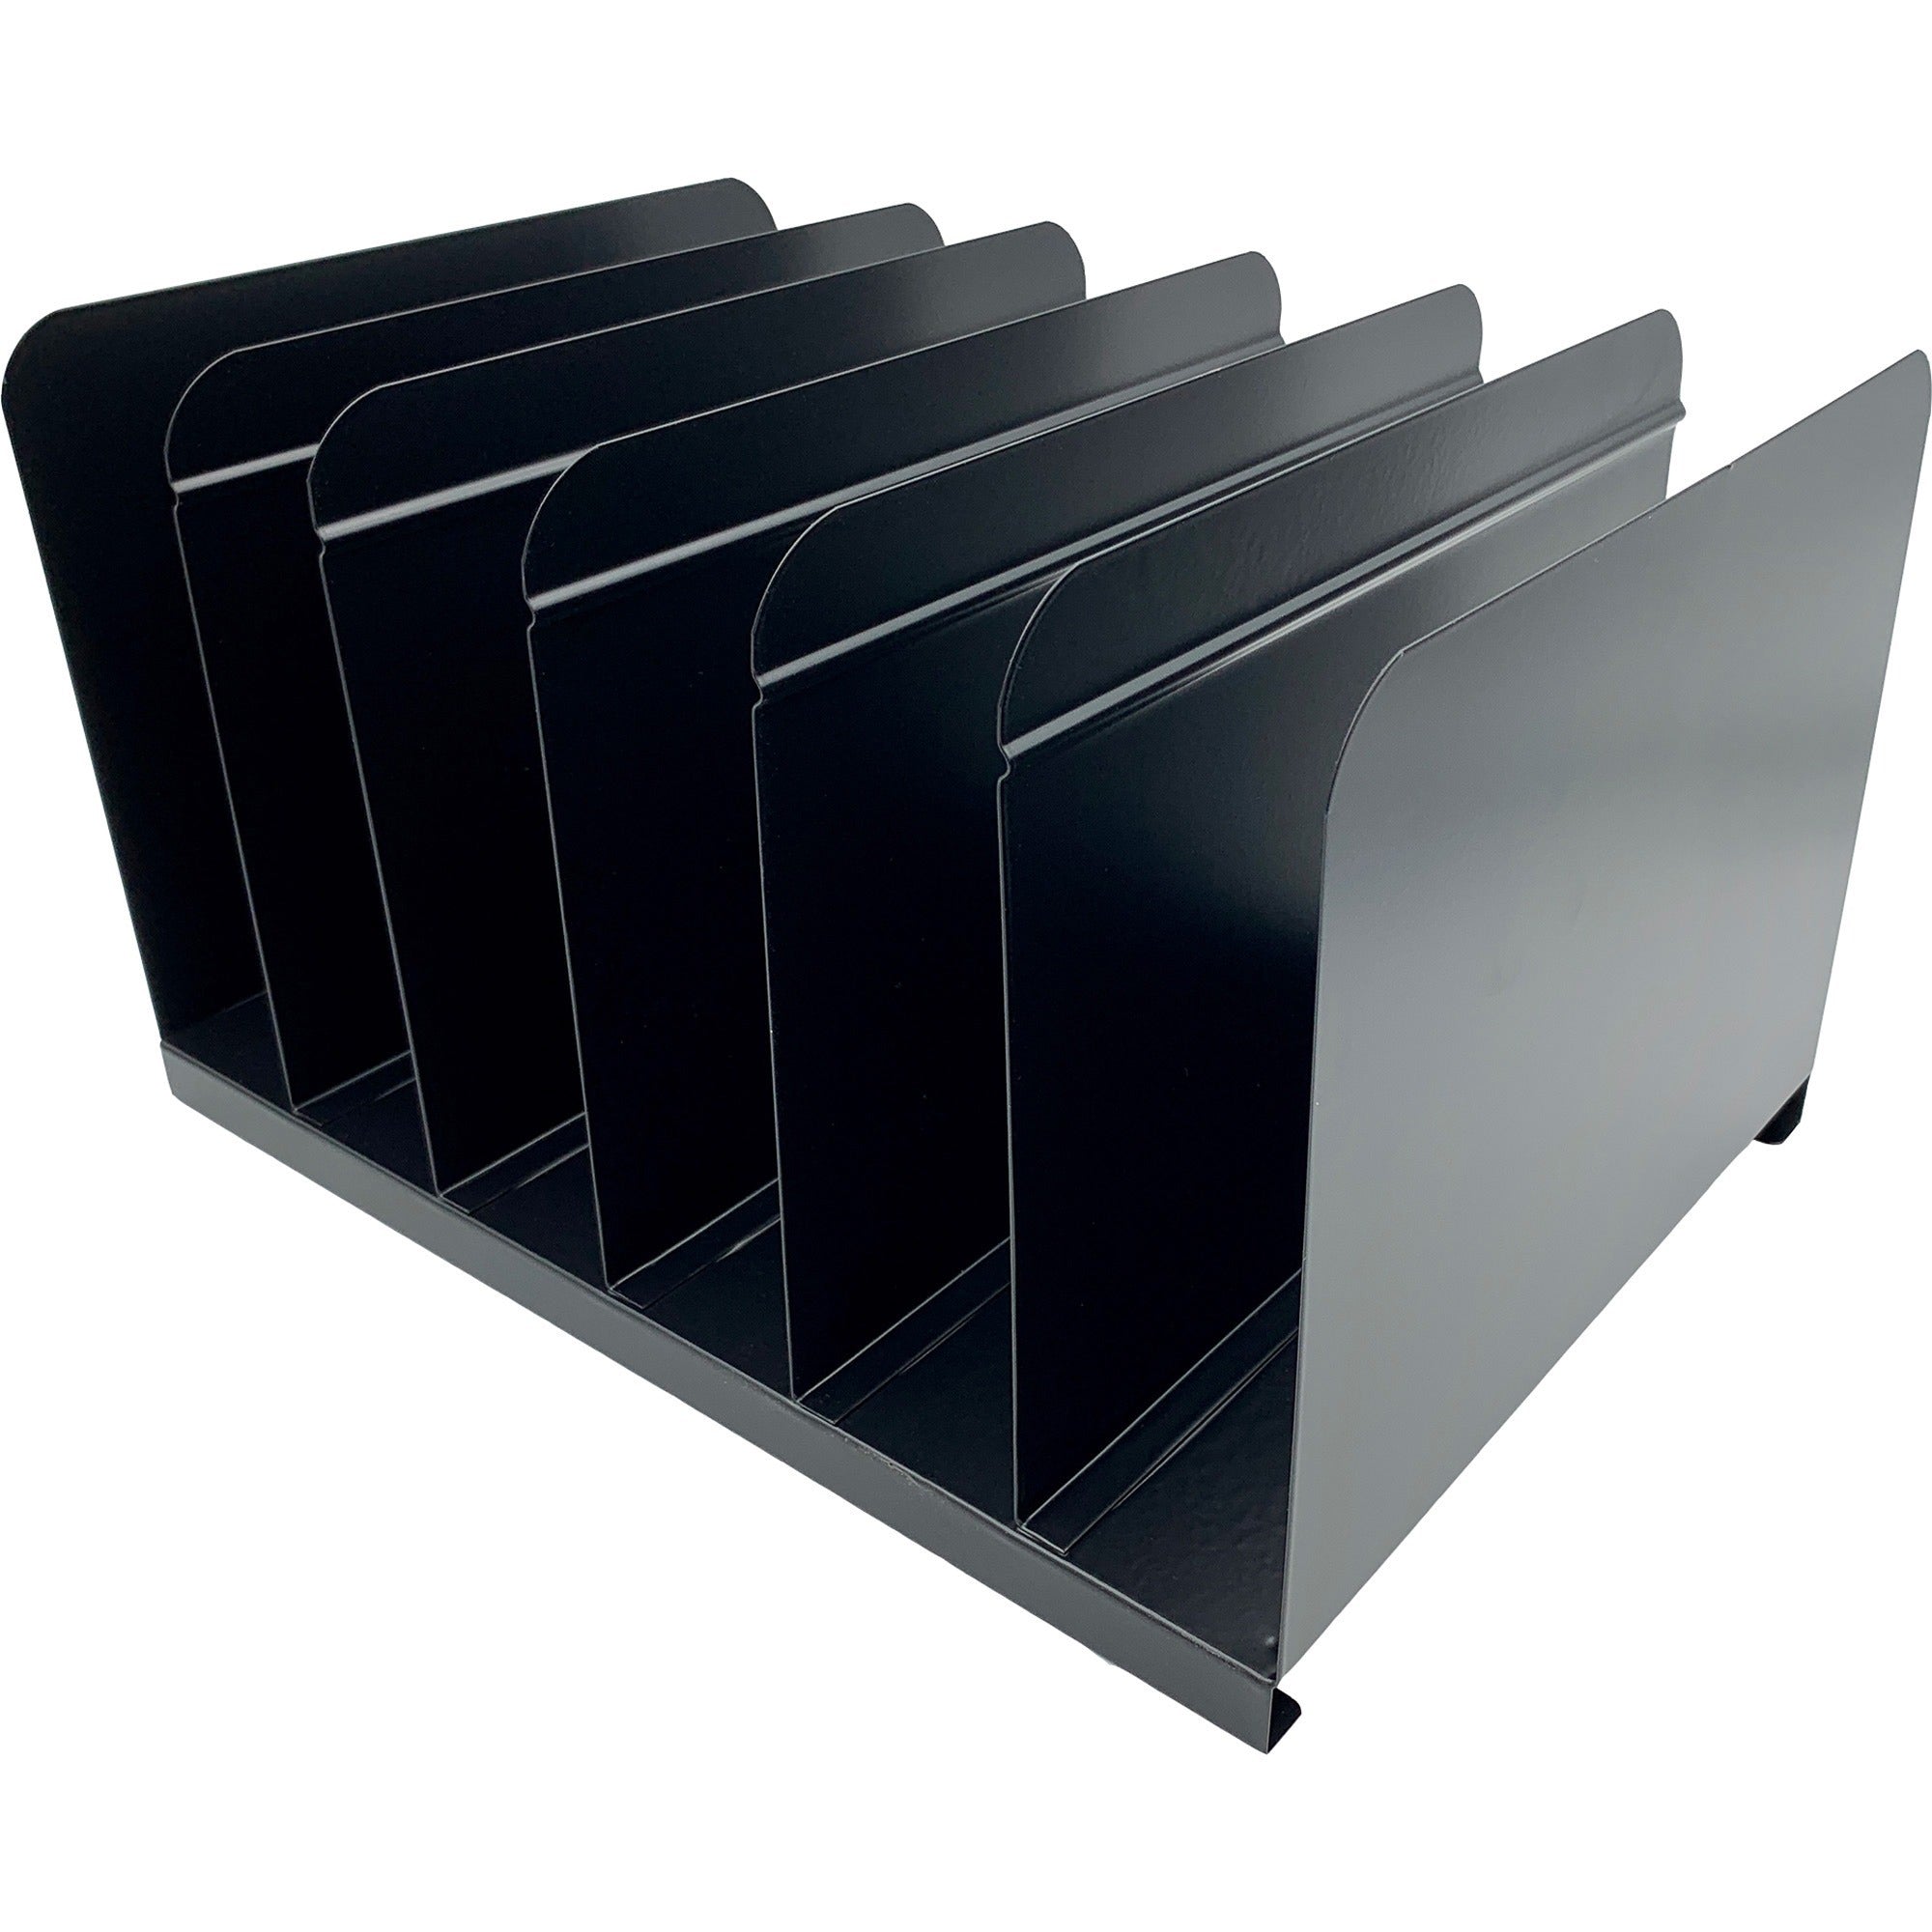 huron-6-slot-vertical-book-rack-6-compartments-vertical-9-height-x-15-width-x-11-depth-durable-black-steel-1-each_hurhasz0164 - 1